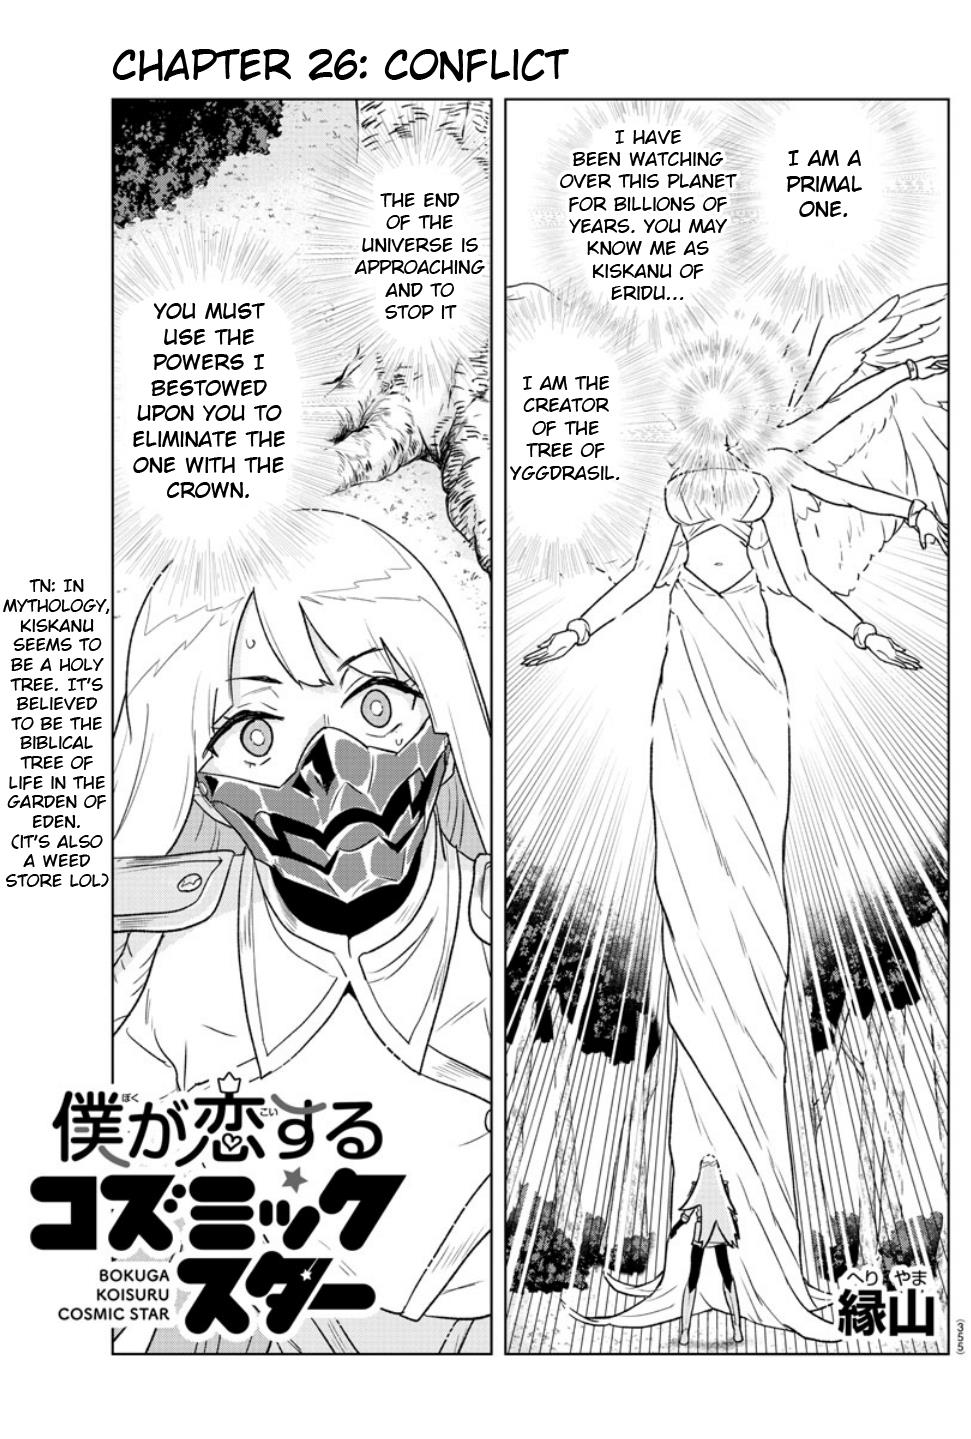 Boku Ga Koisuru Cosmic Star - chapter 26 - #1